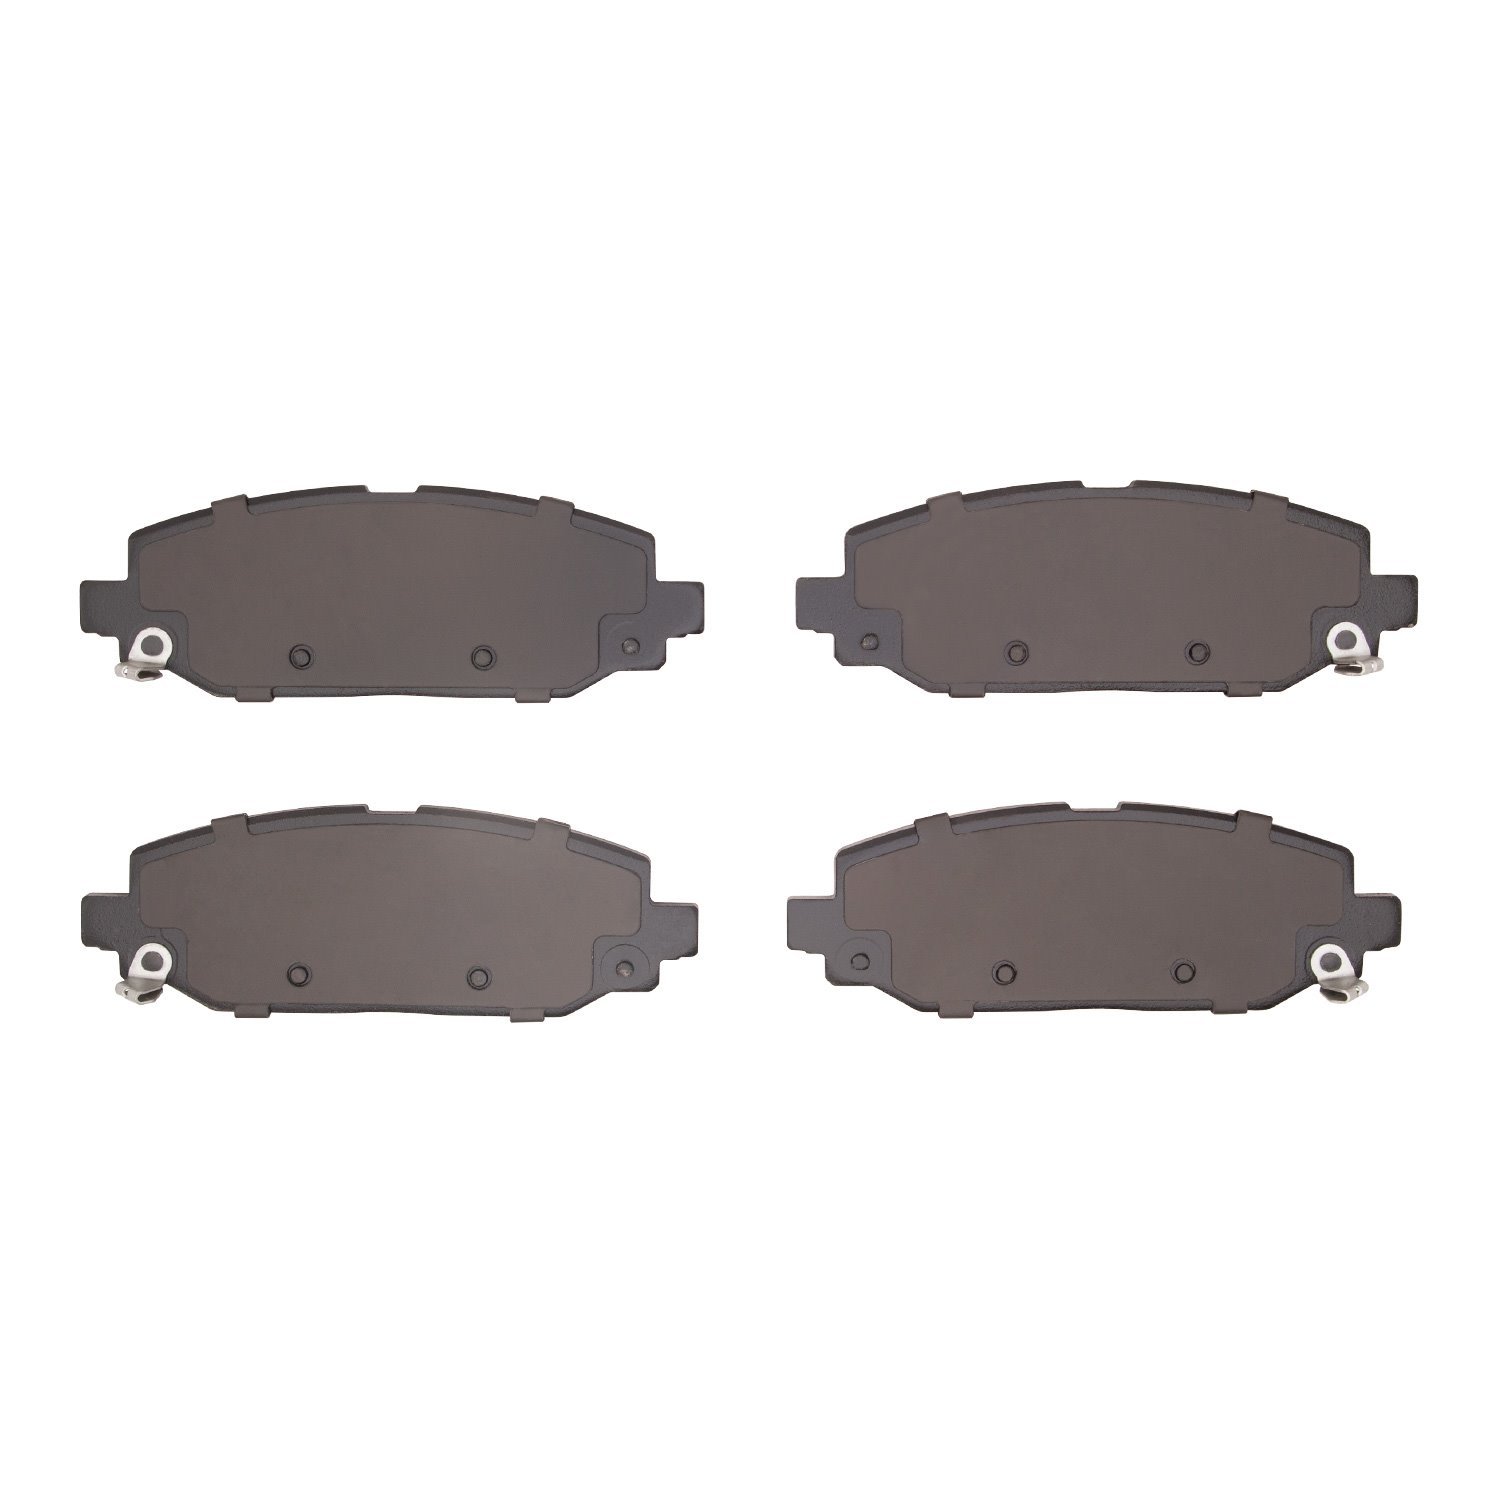 1400-2186-00 Ultimate-Duty Brake Pads Kit, Fits Select Mopar, Position: Rear